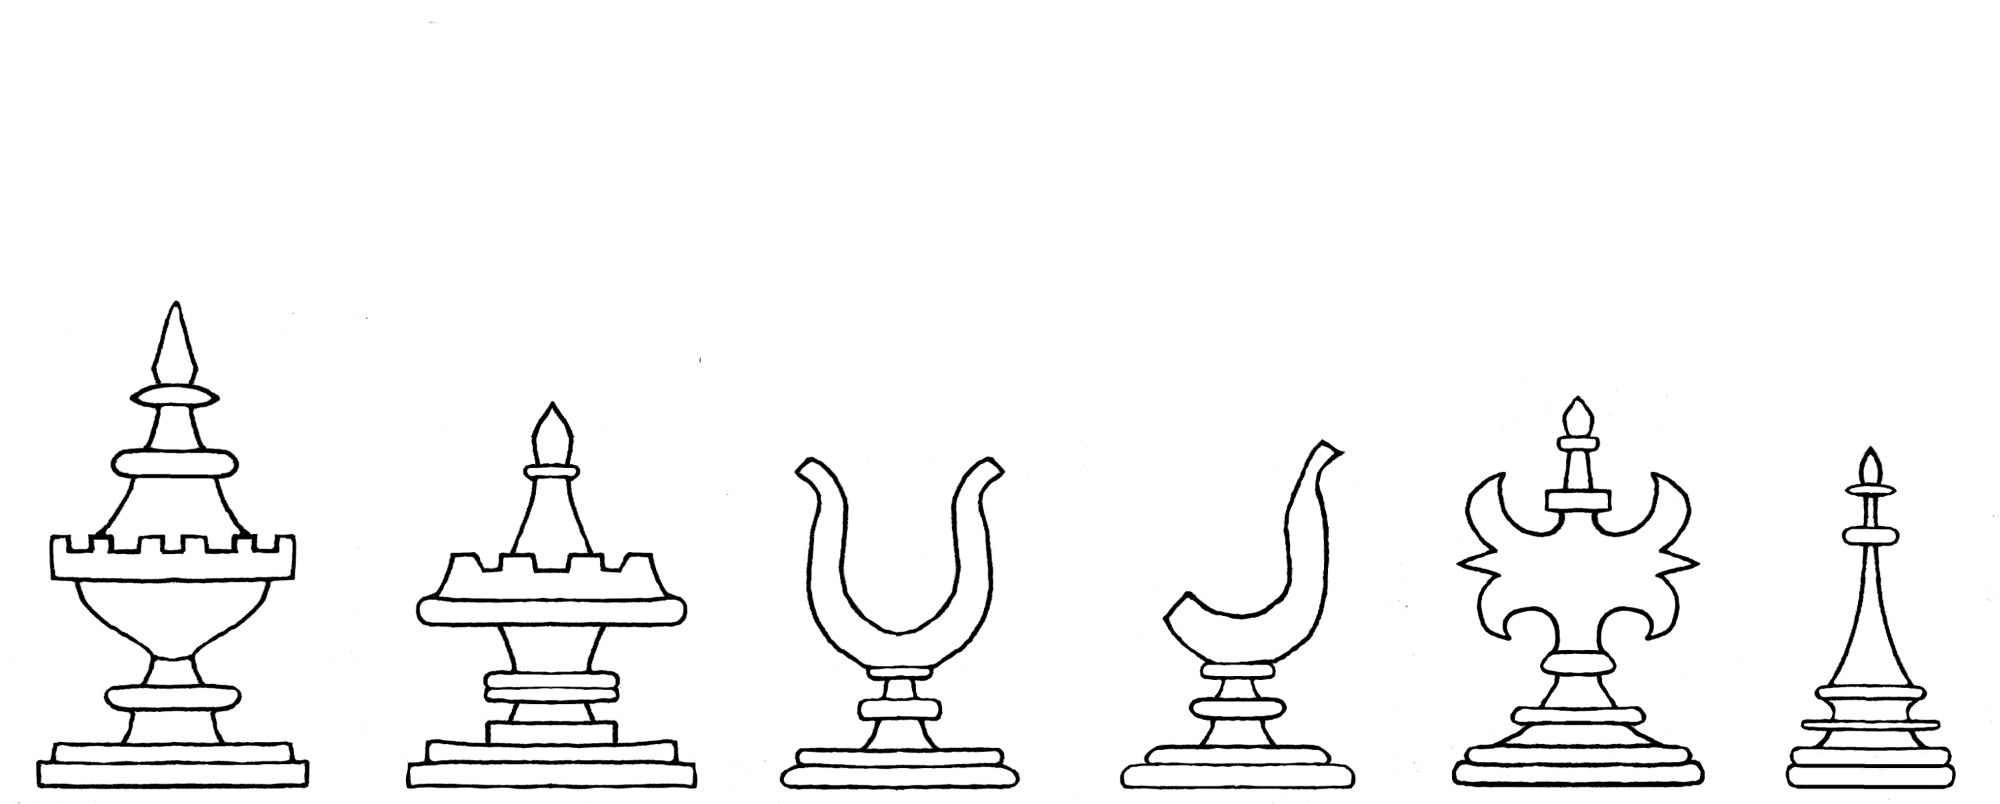 Kobel chess set number 2 interpretive diagram